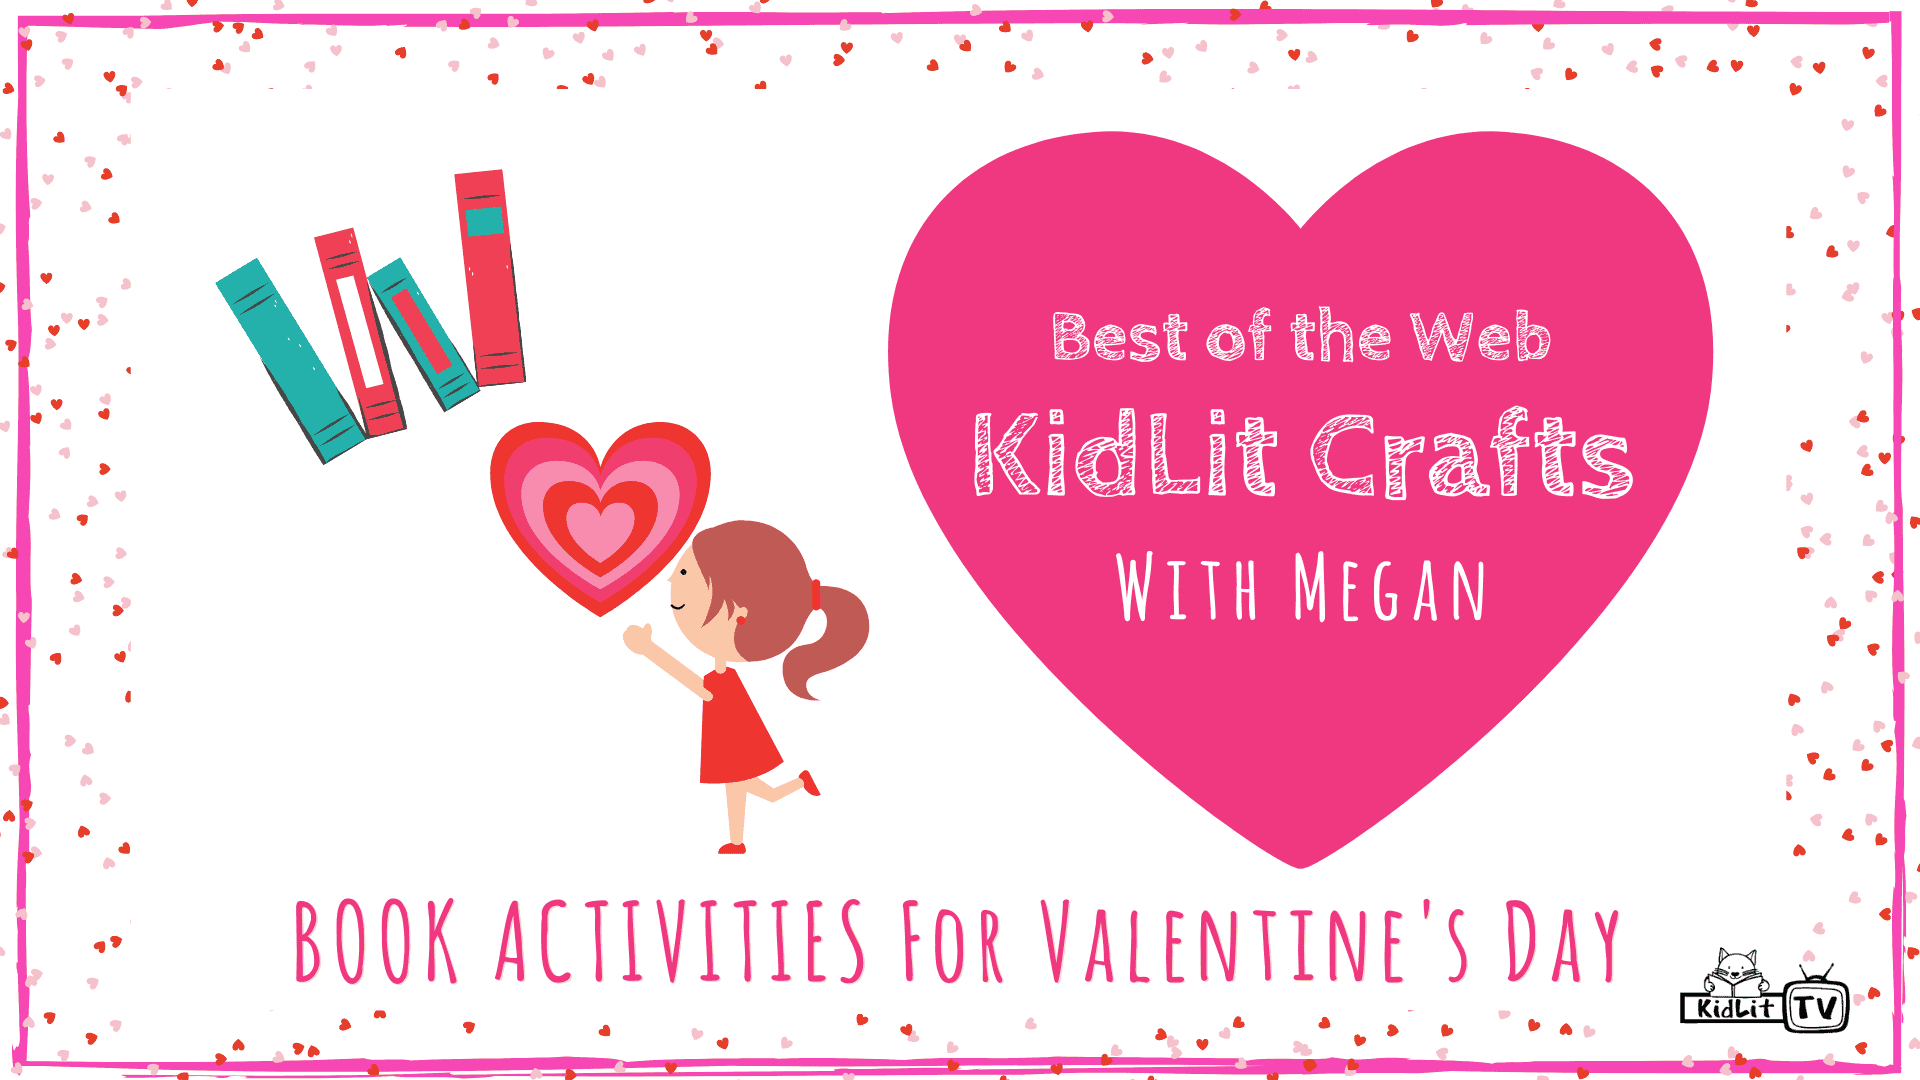 NEW Womens OS/TC Koala Bear Leggings, Valentines Day Pink Heart